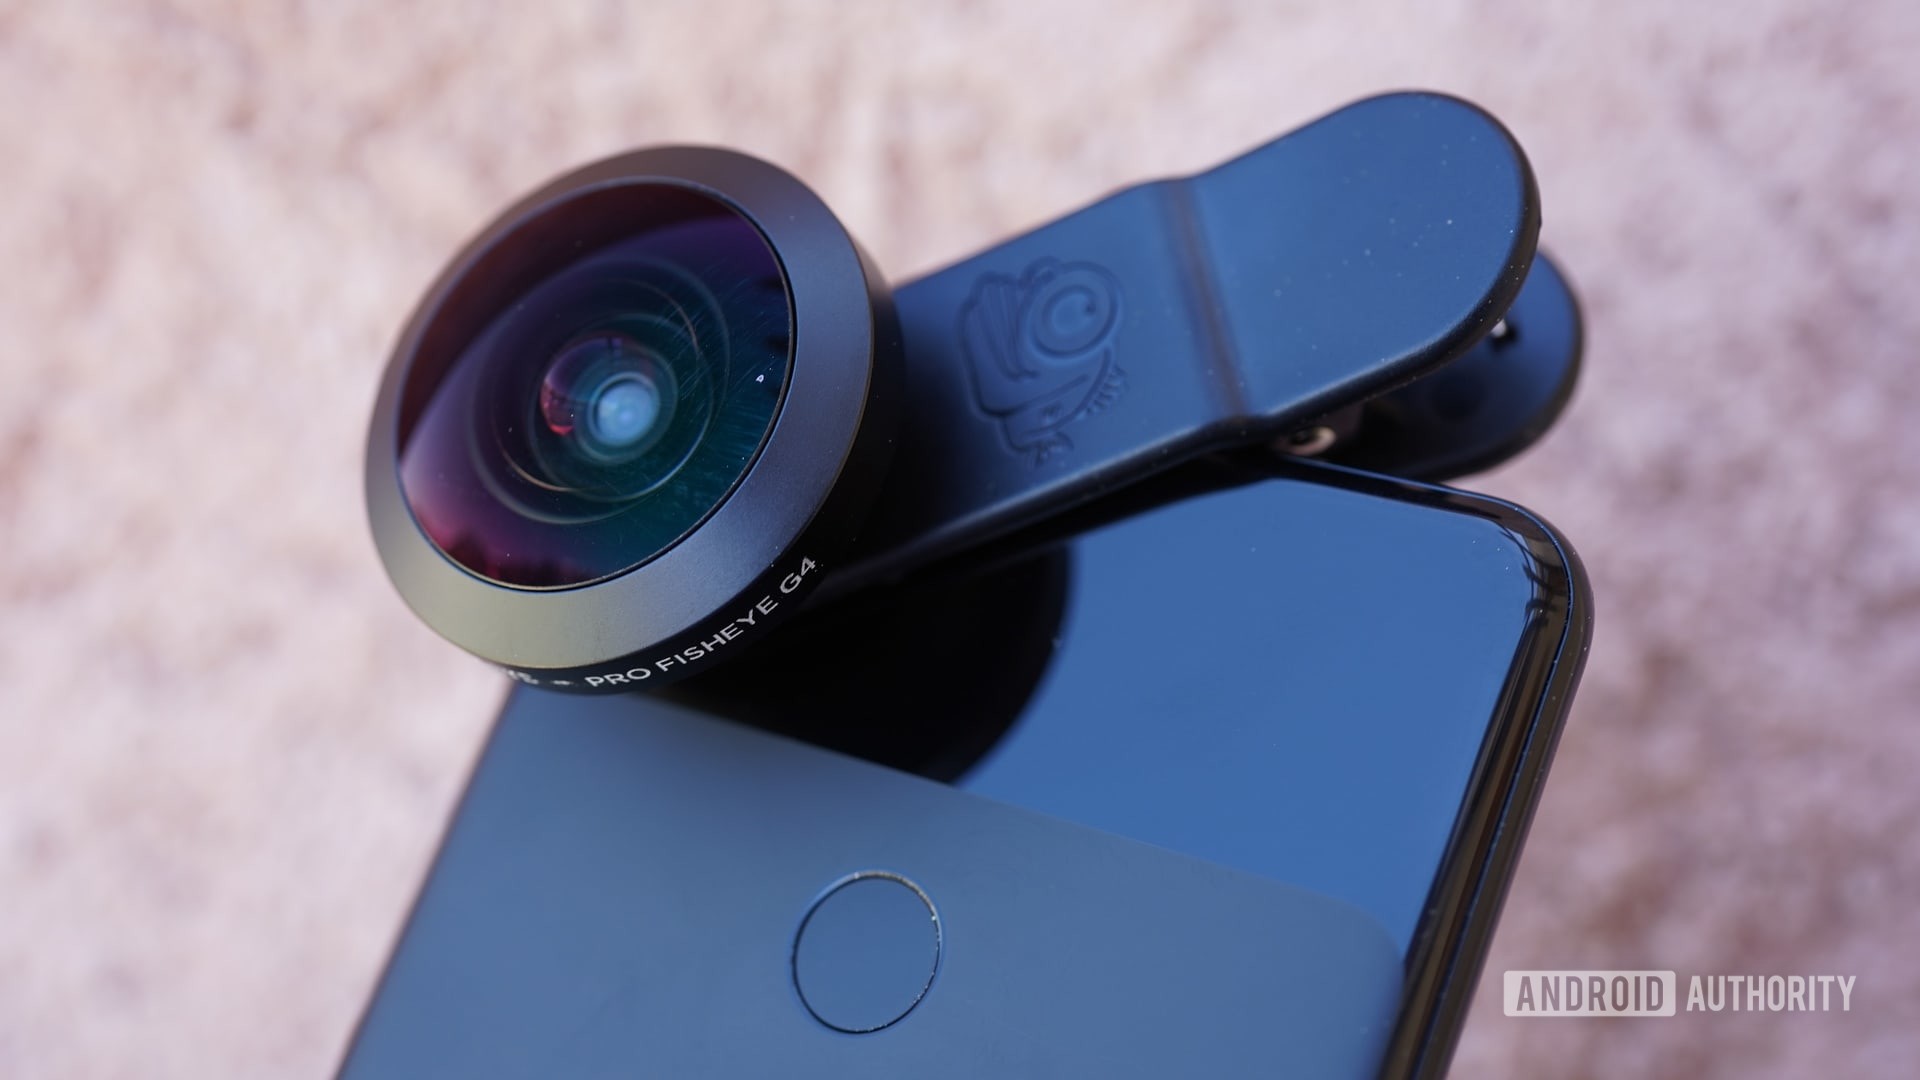 Mos sympathie Foto Black Eye Pro Kit G4 review: Clip-on lenses improve your phone's camera